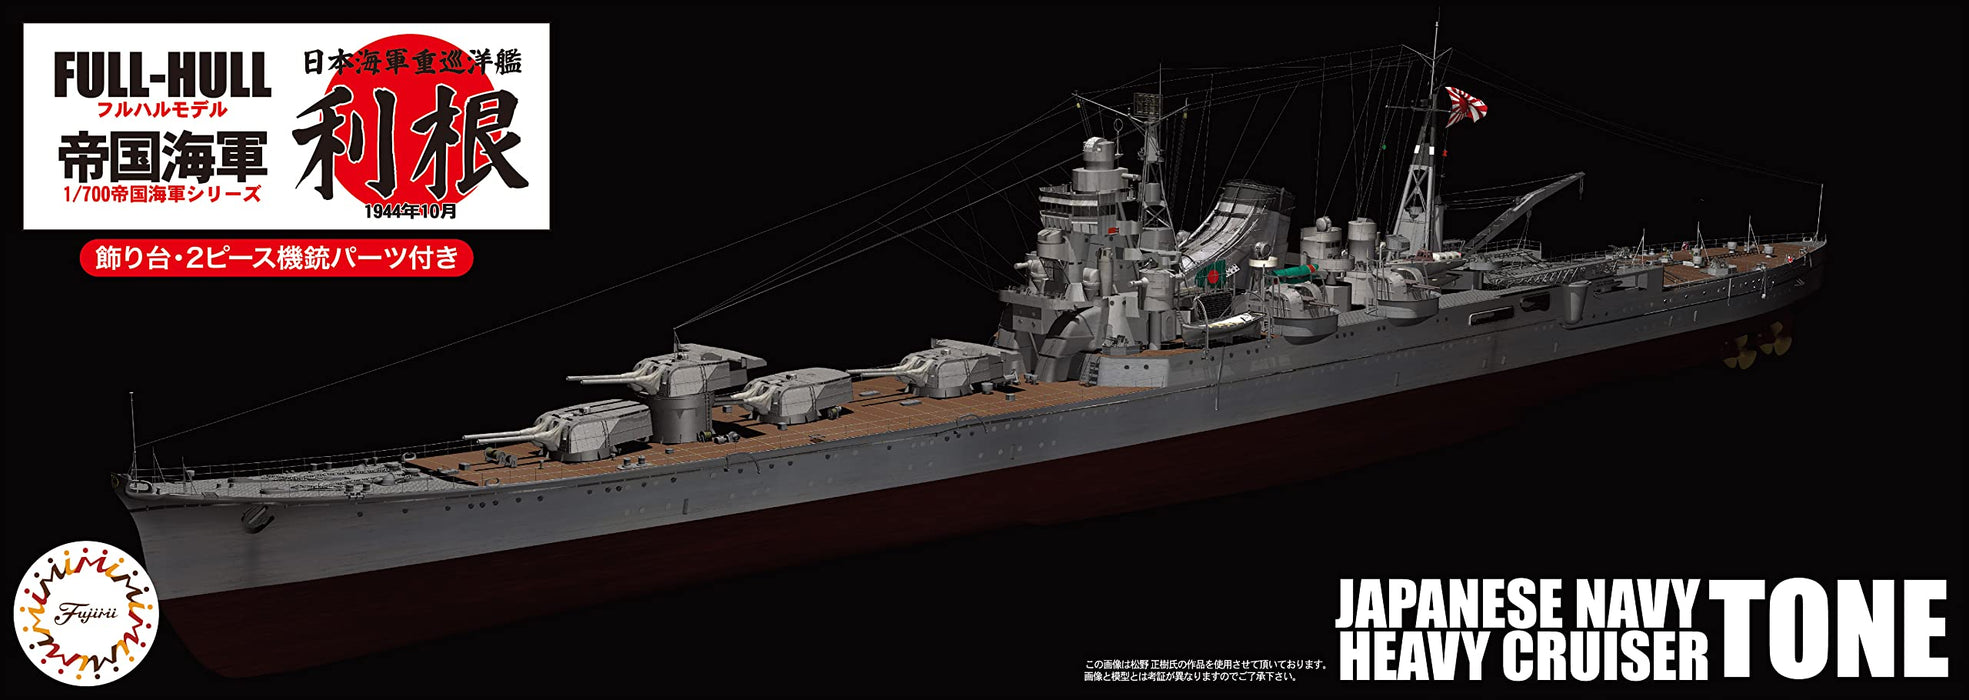 Fujimi Ijn Cruiser Tone Full Hull Model 1/700 Japanese Plastic Scale Models